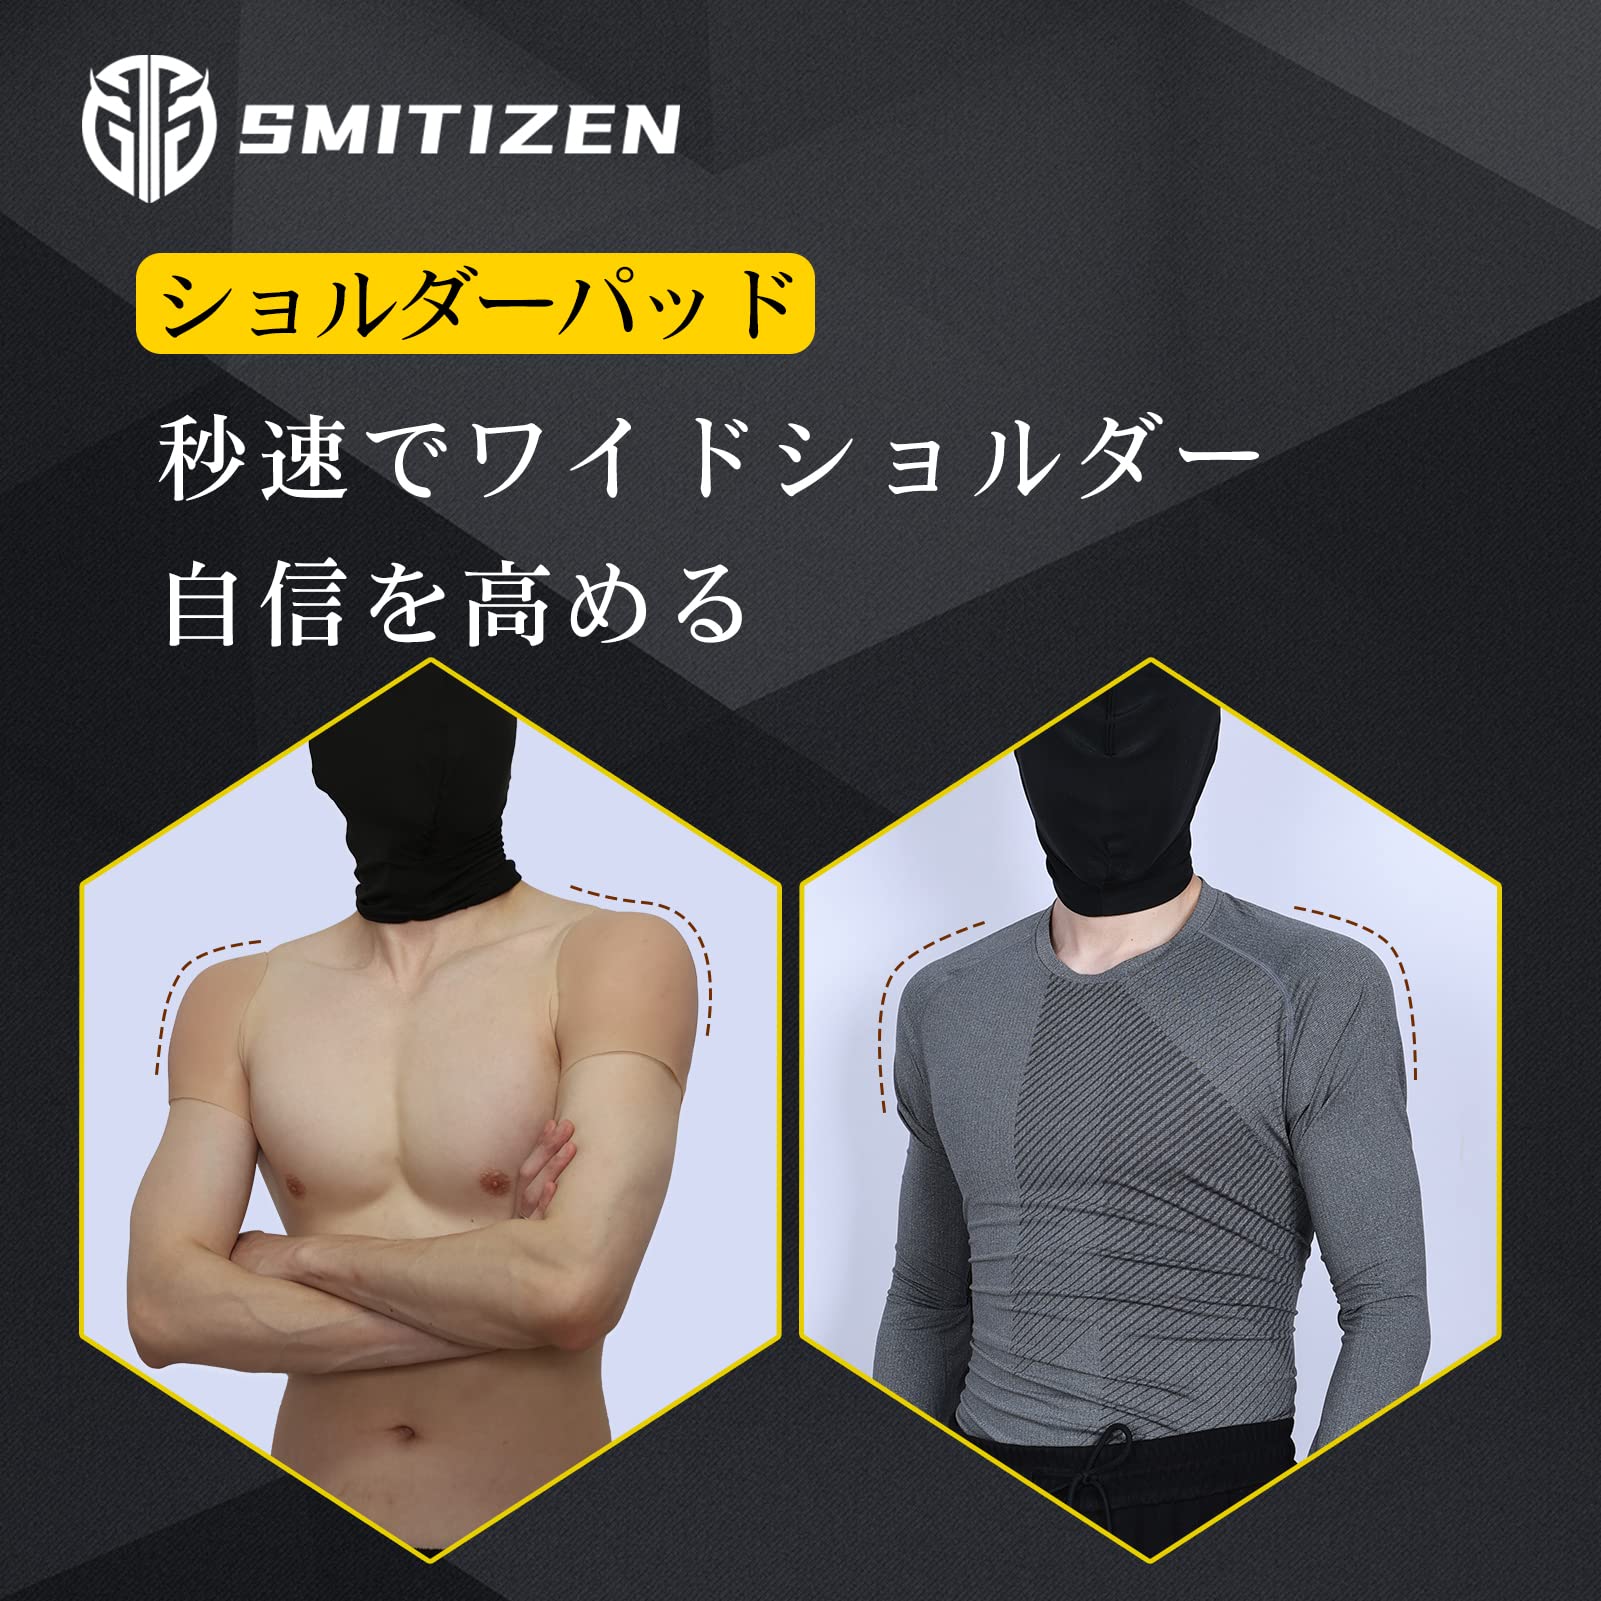 【M】シリコン製ショルダーパッド マッスル強調 肩幅調整用パッド 太い肩のサポート